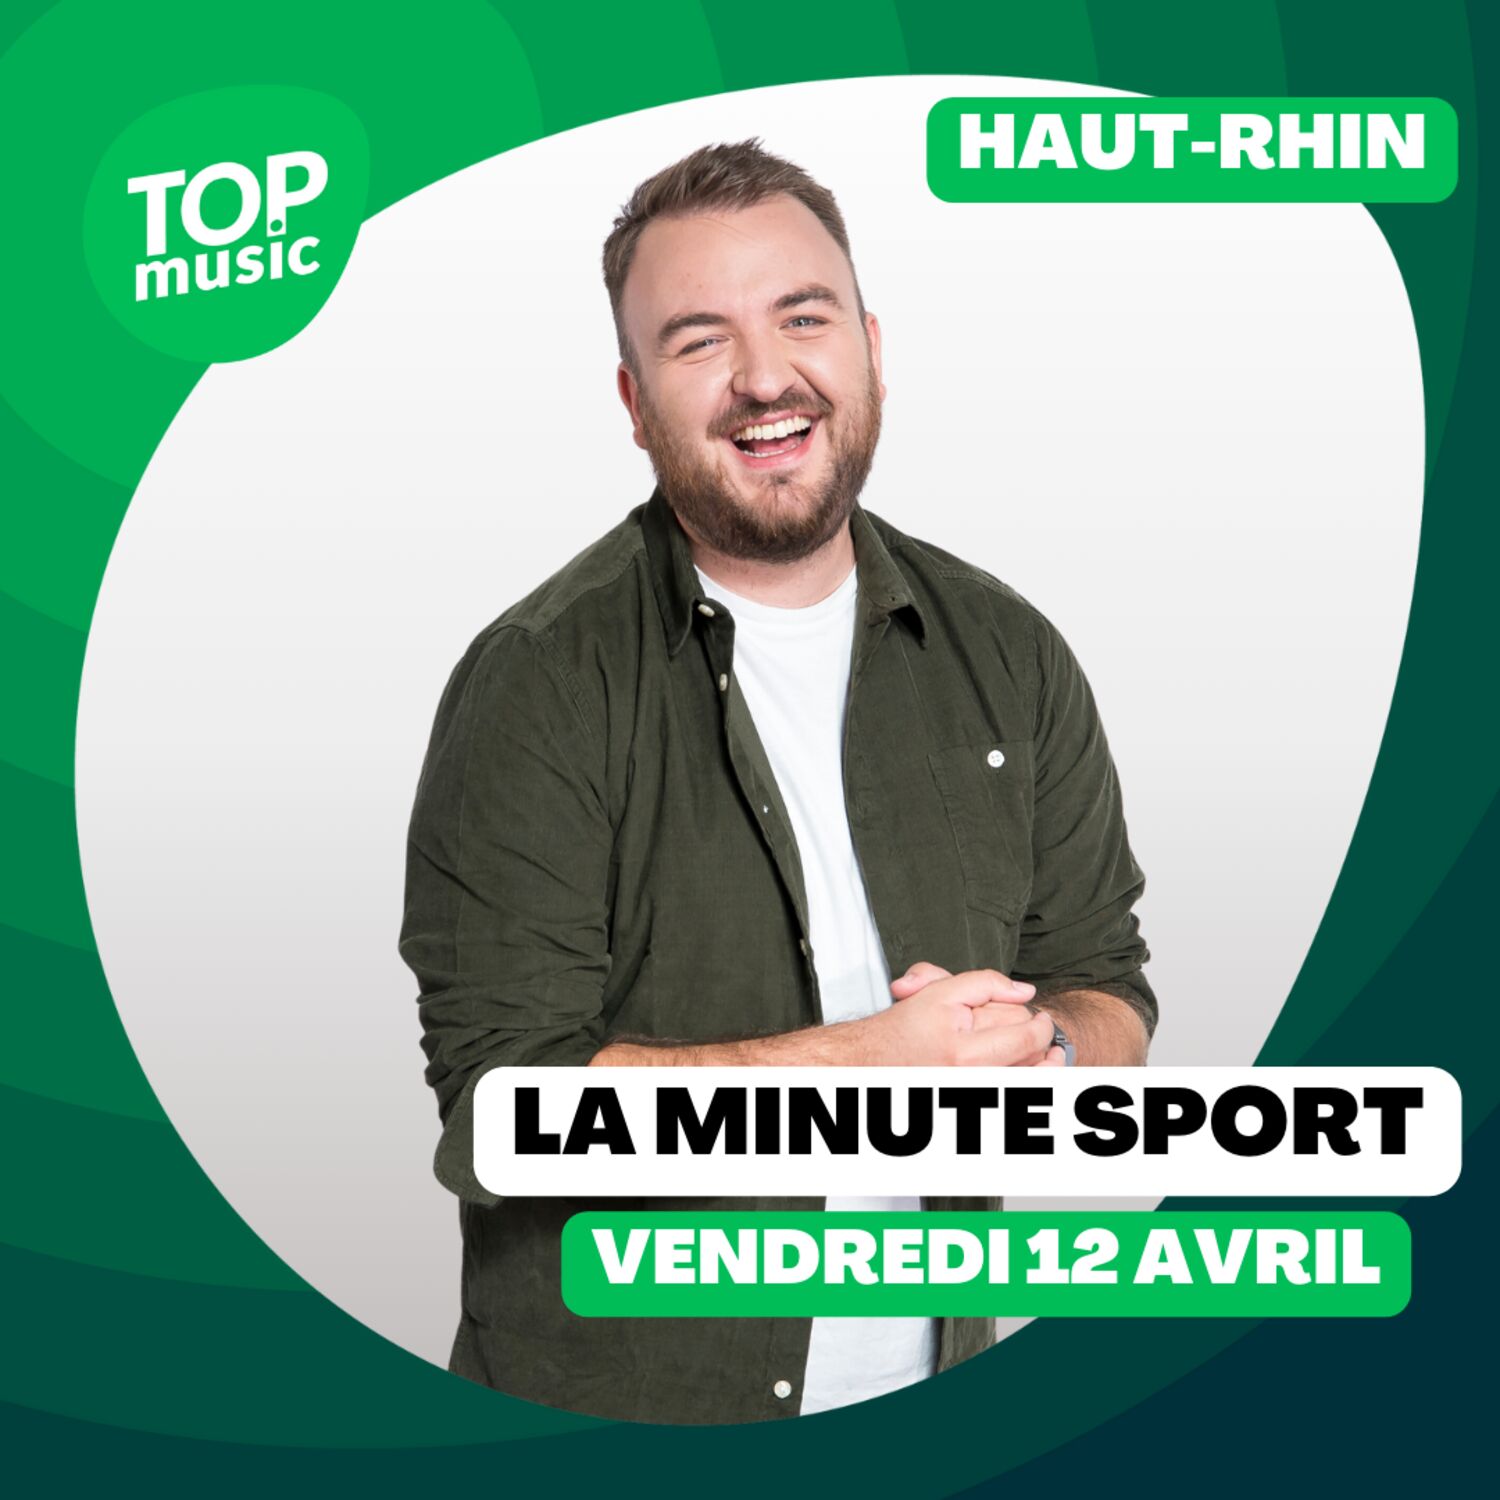 La Minute sport du Haut-Rhin - vendredi 12 avril